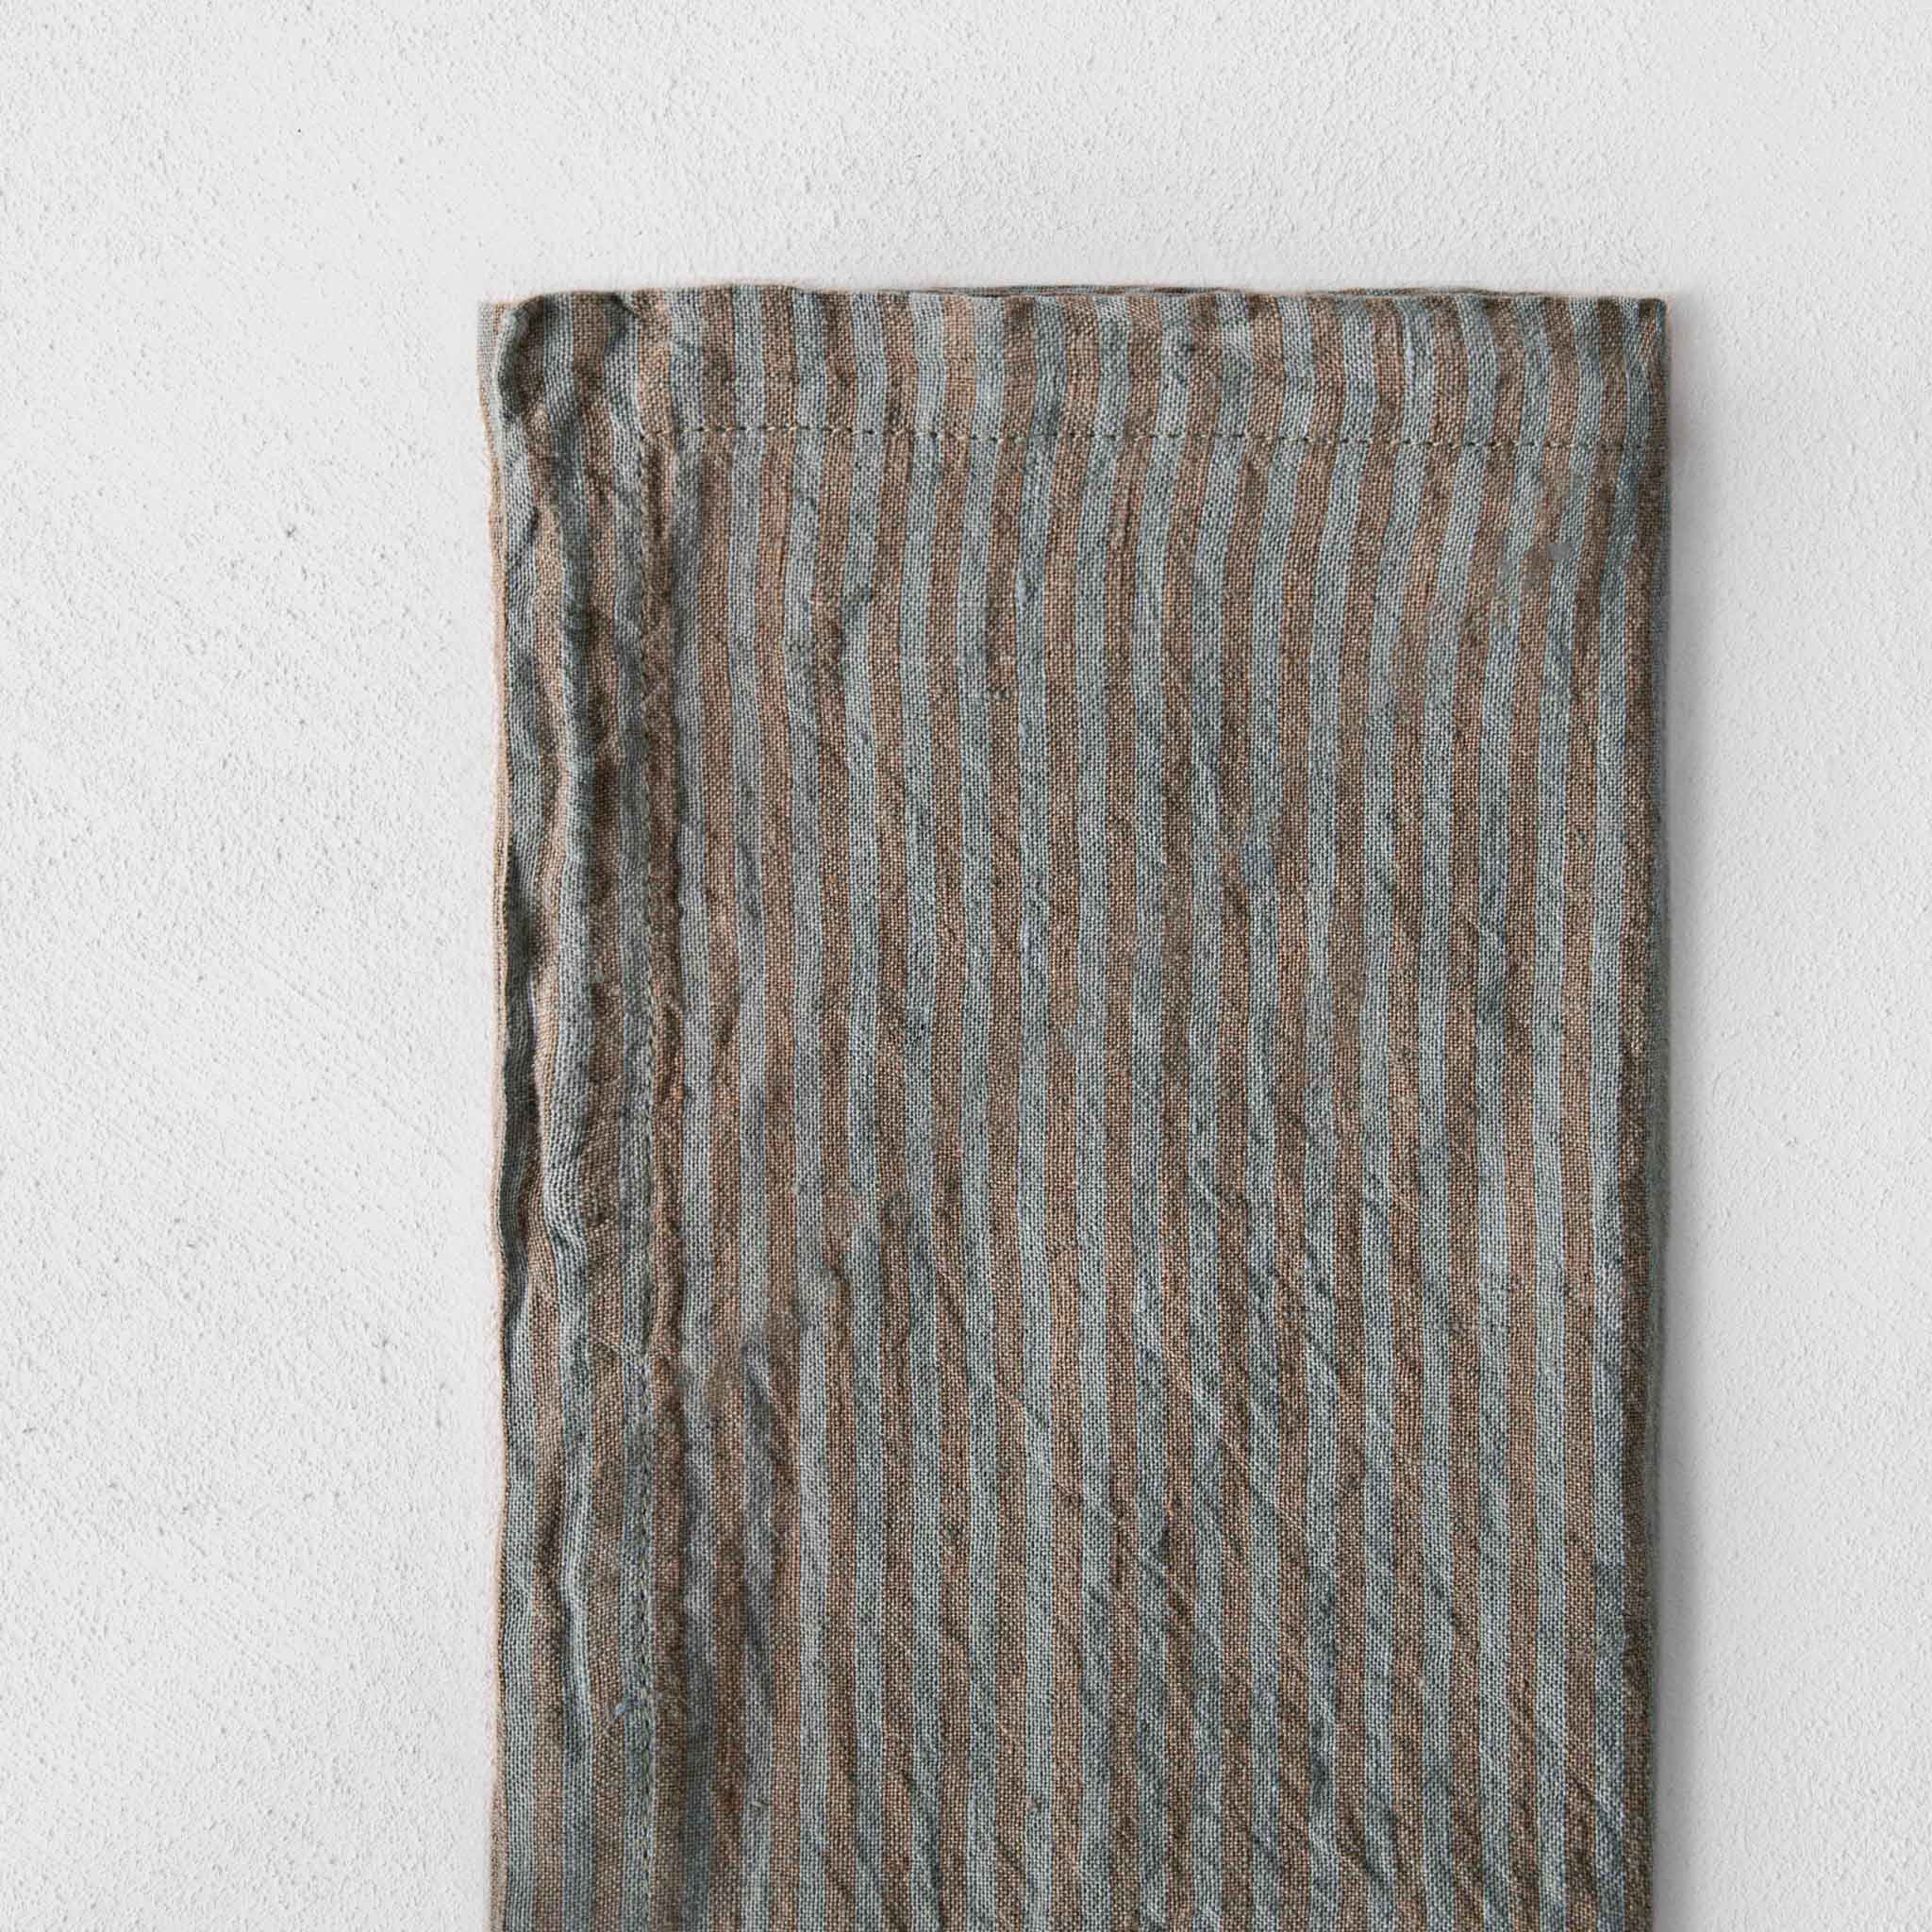 Stripe Linen Napkin | Teal & Brown Stripe | Hale Mercantile Co.